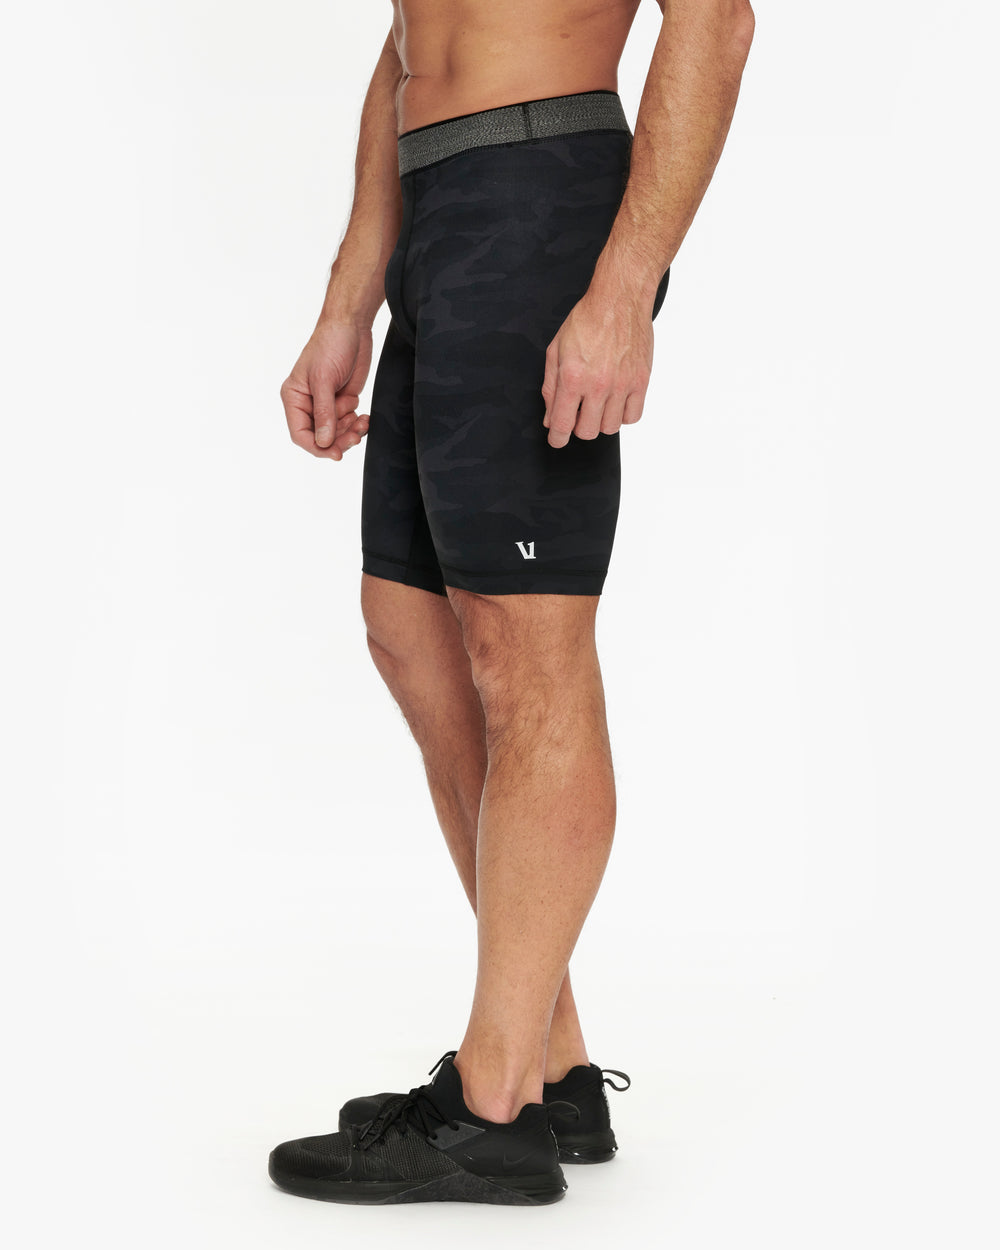 Limitless Compression Short, Men's Black Shorts